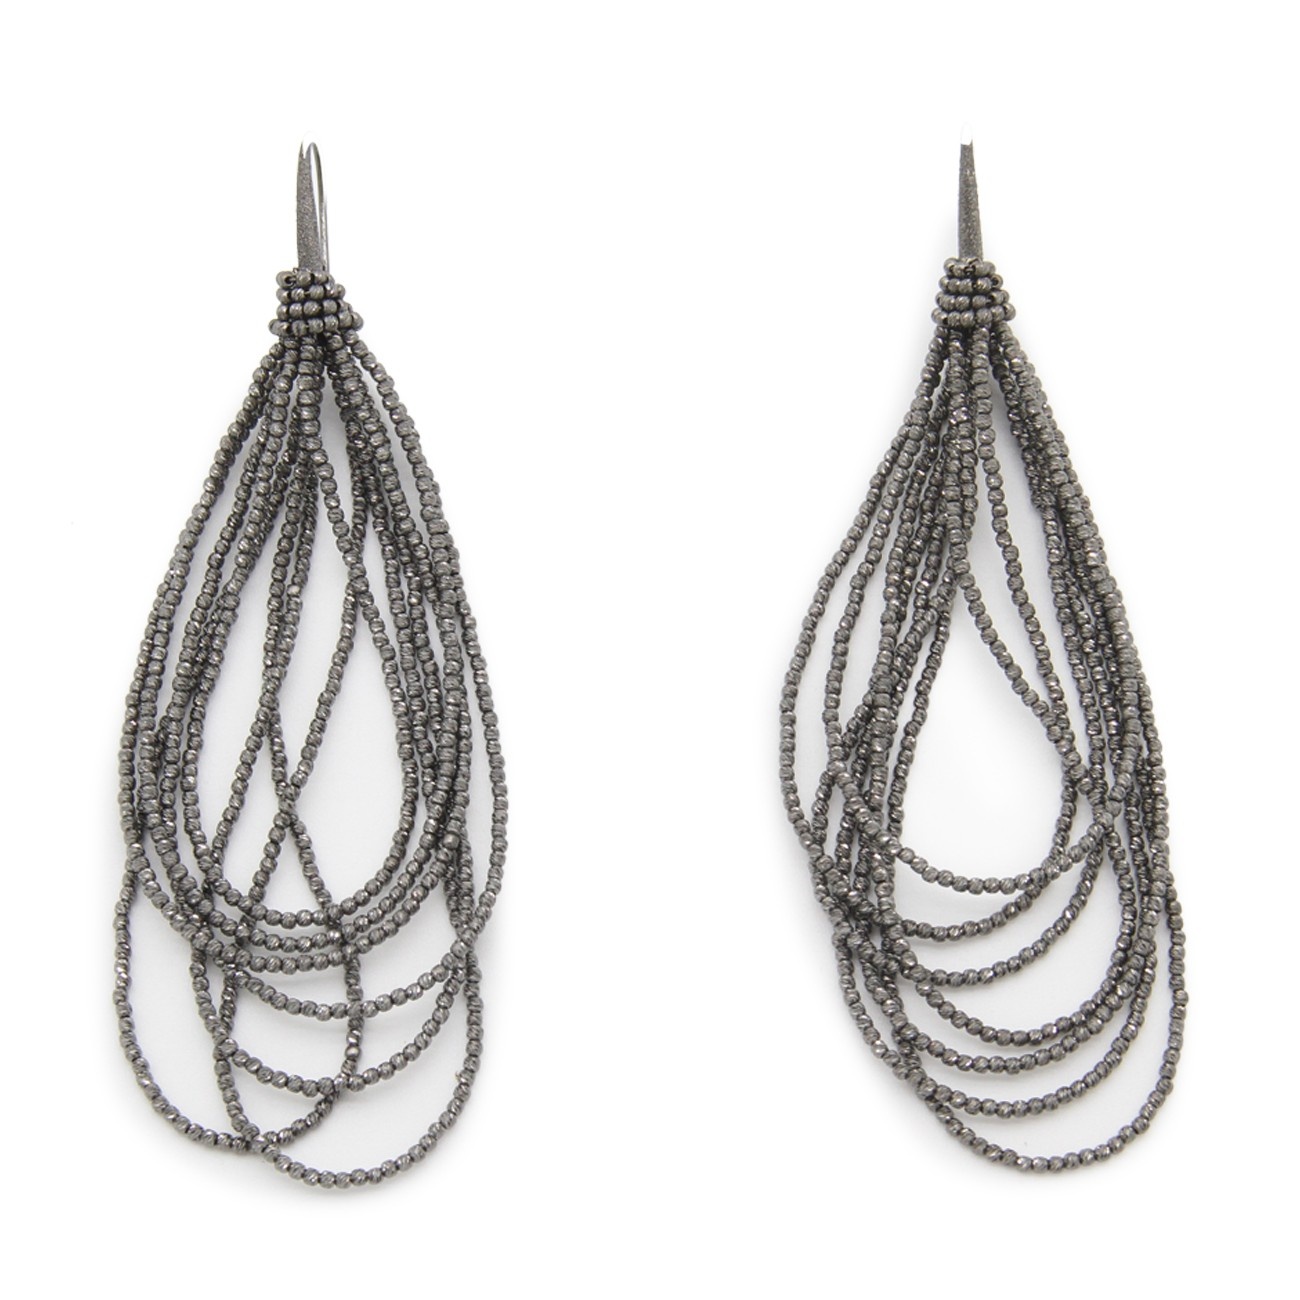 silver tone metal earrings - 1